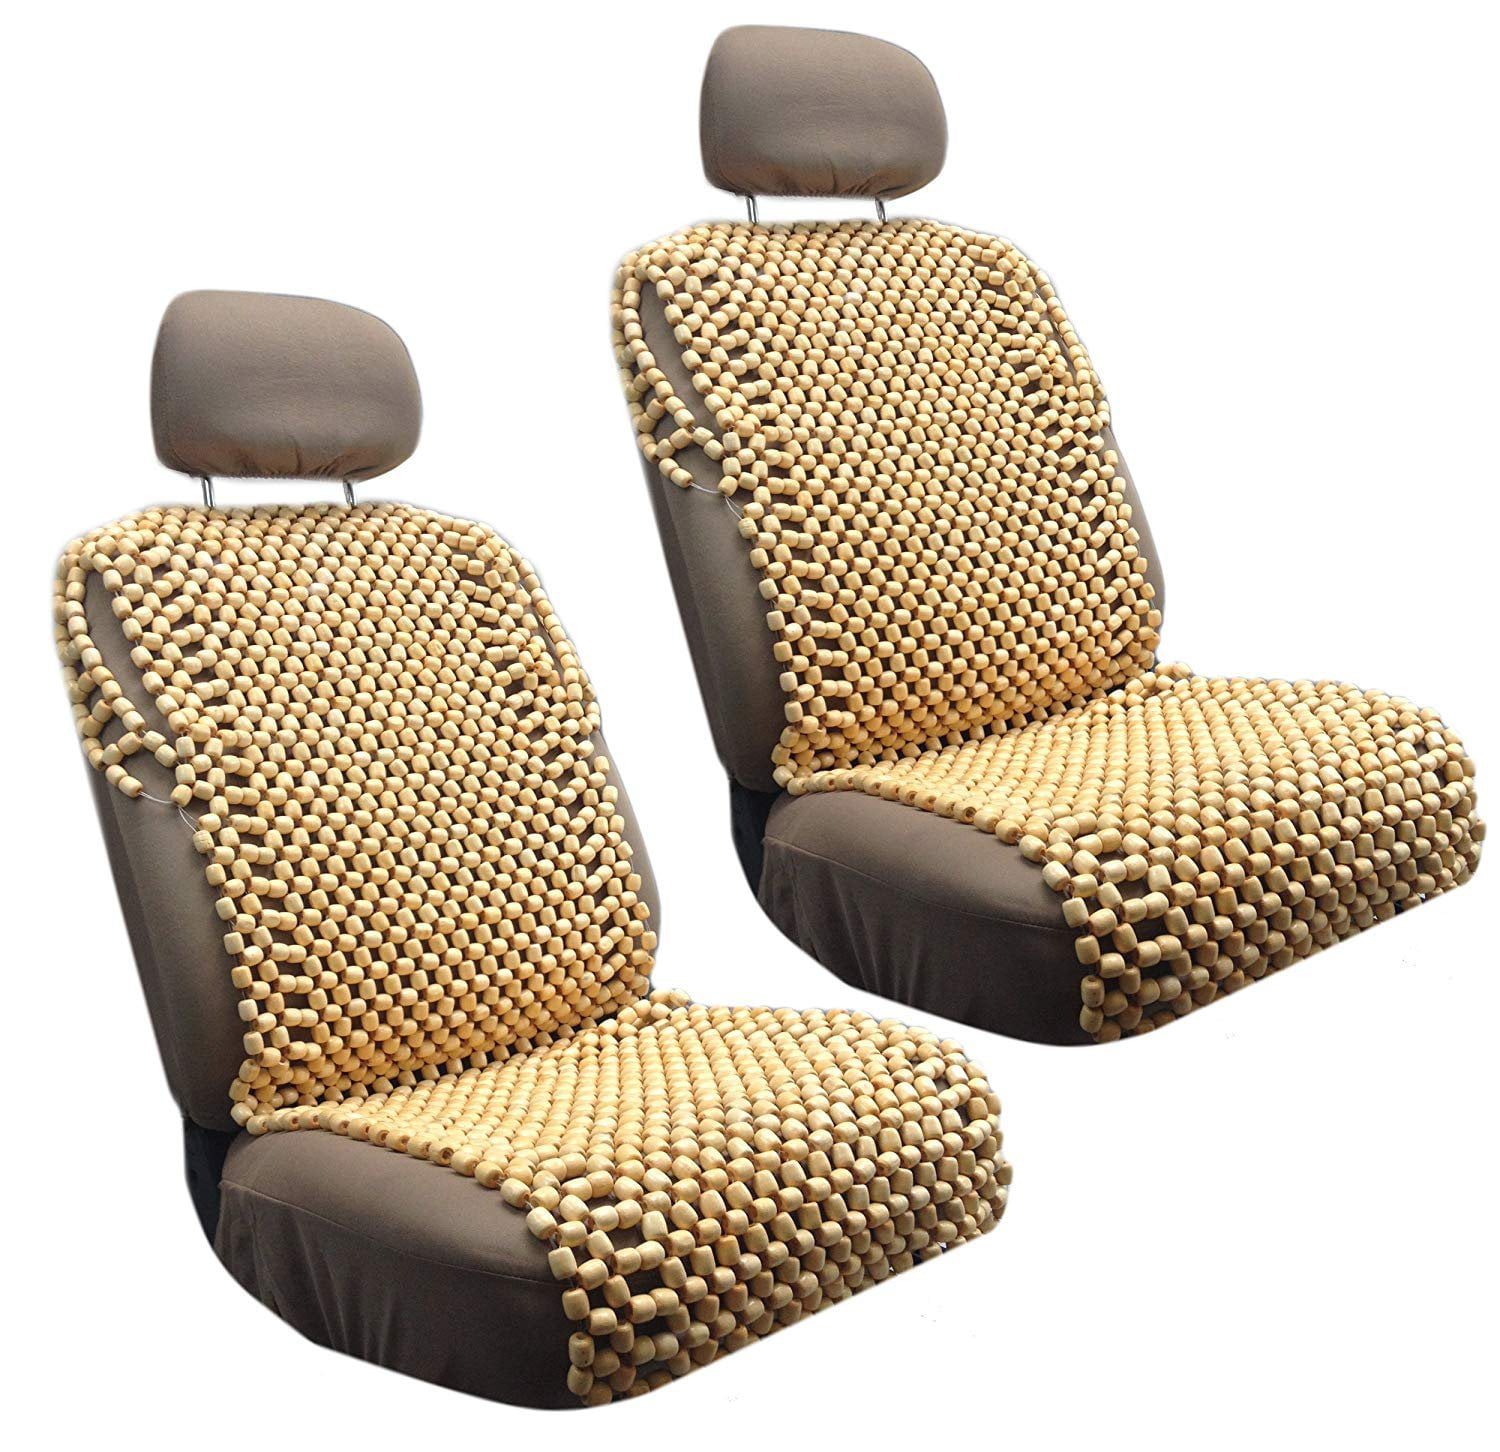 Royal Full Wooden Bead Seat Cushion Covers - Pair Natural Wood Comfort